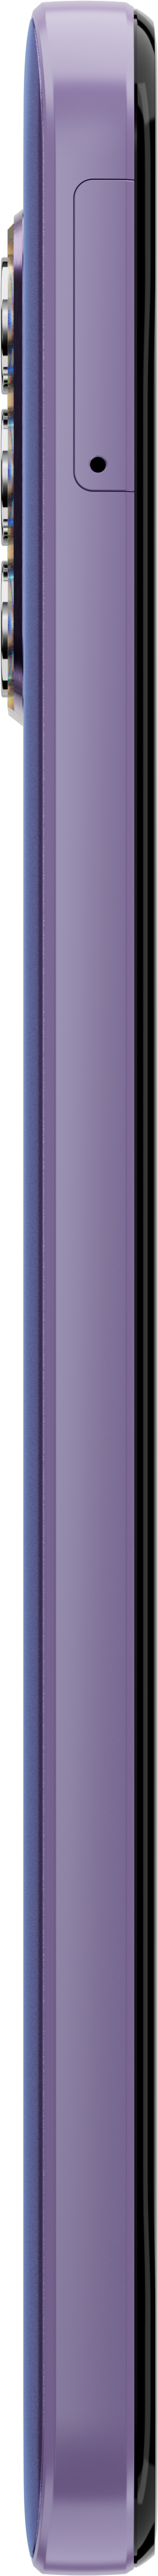 Nokia G42 128GB Violetti